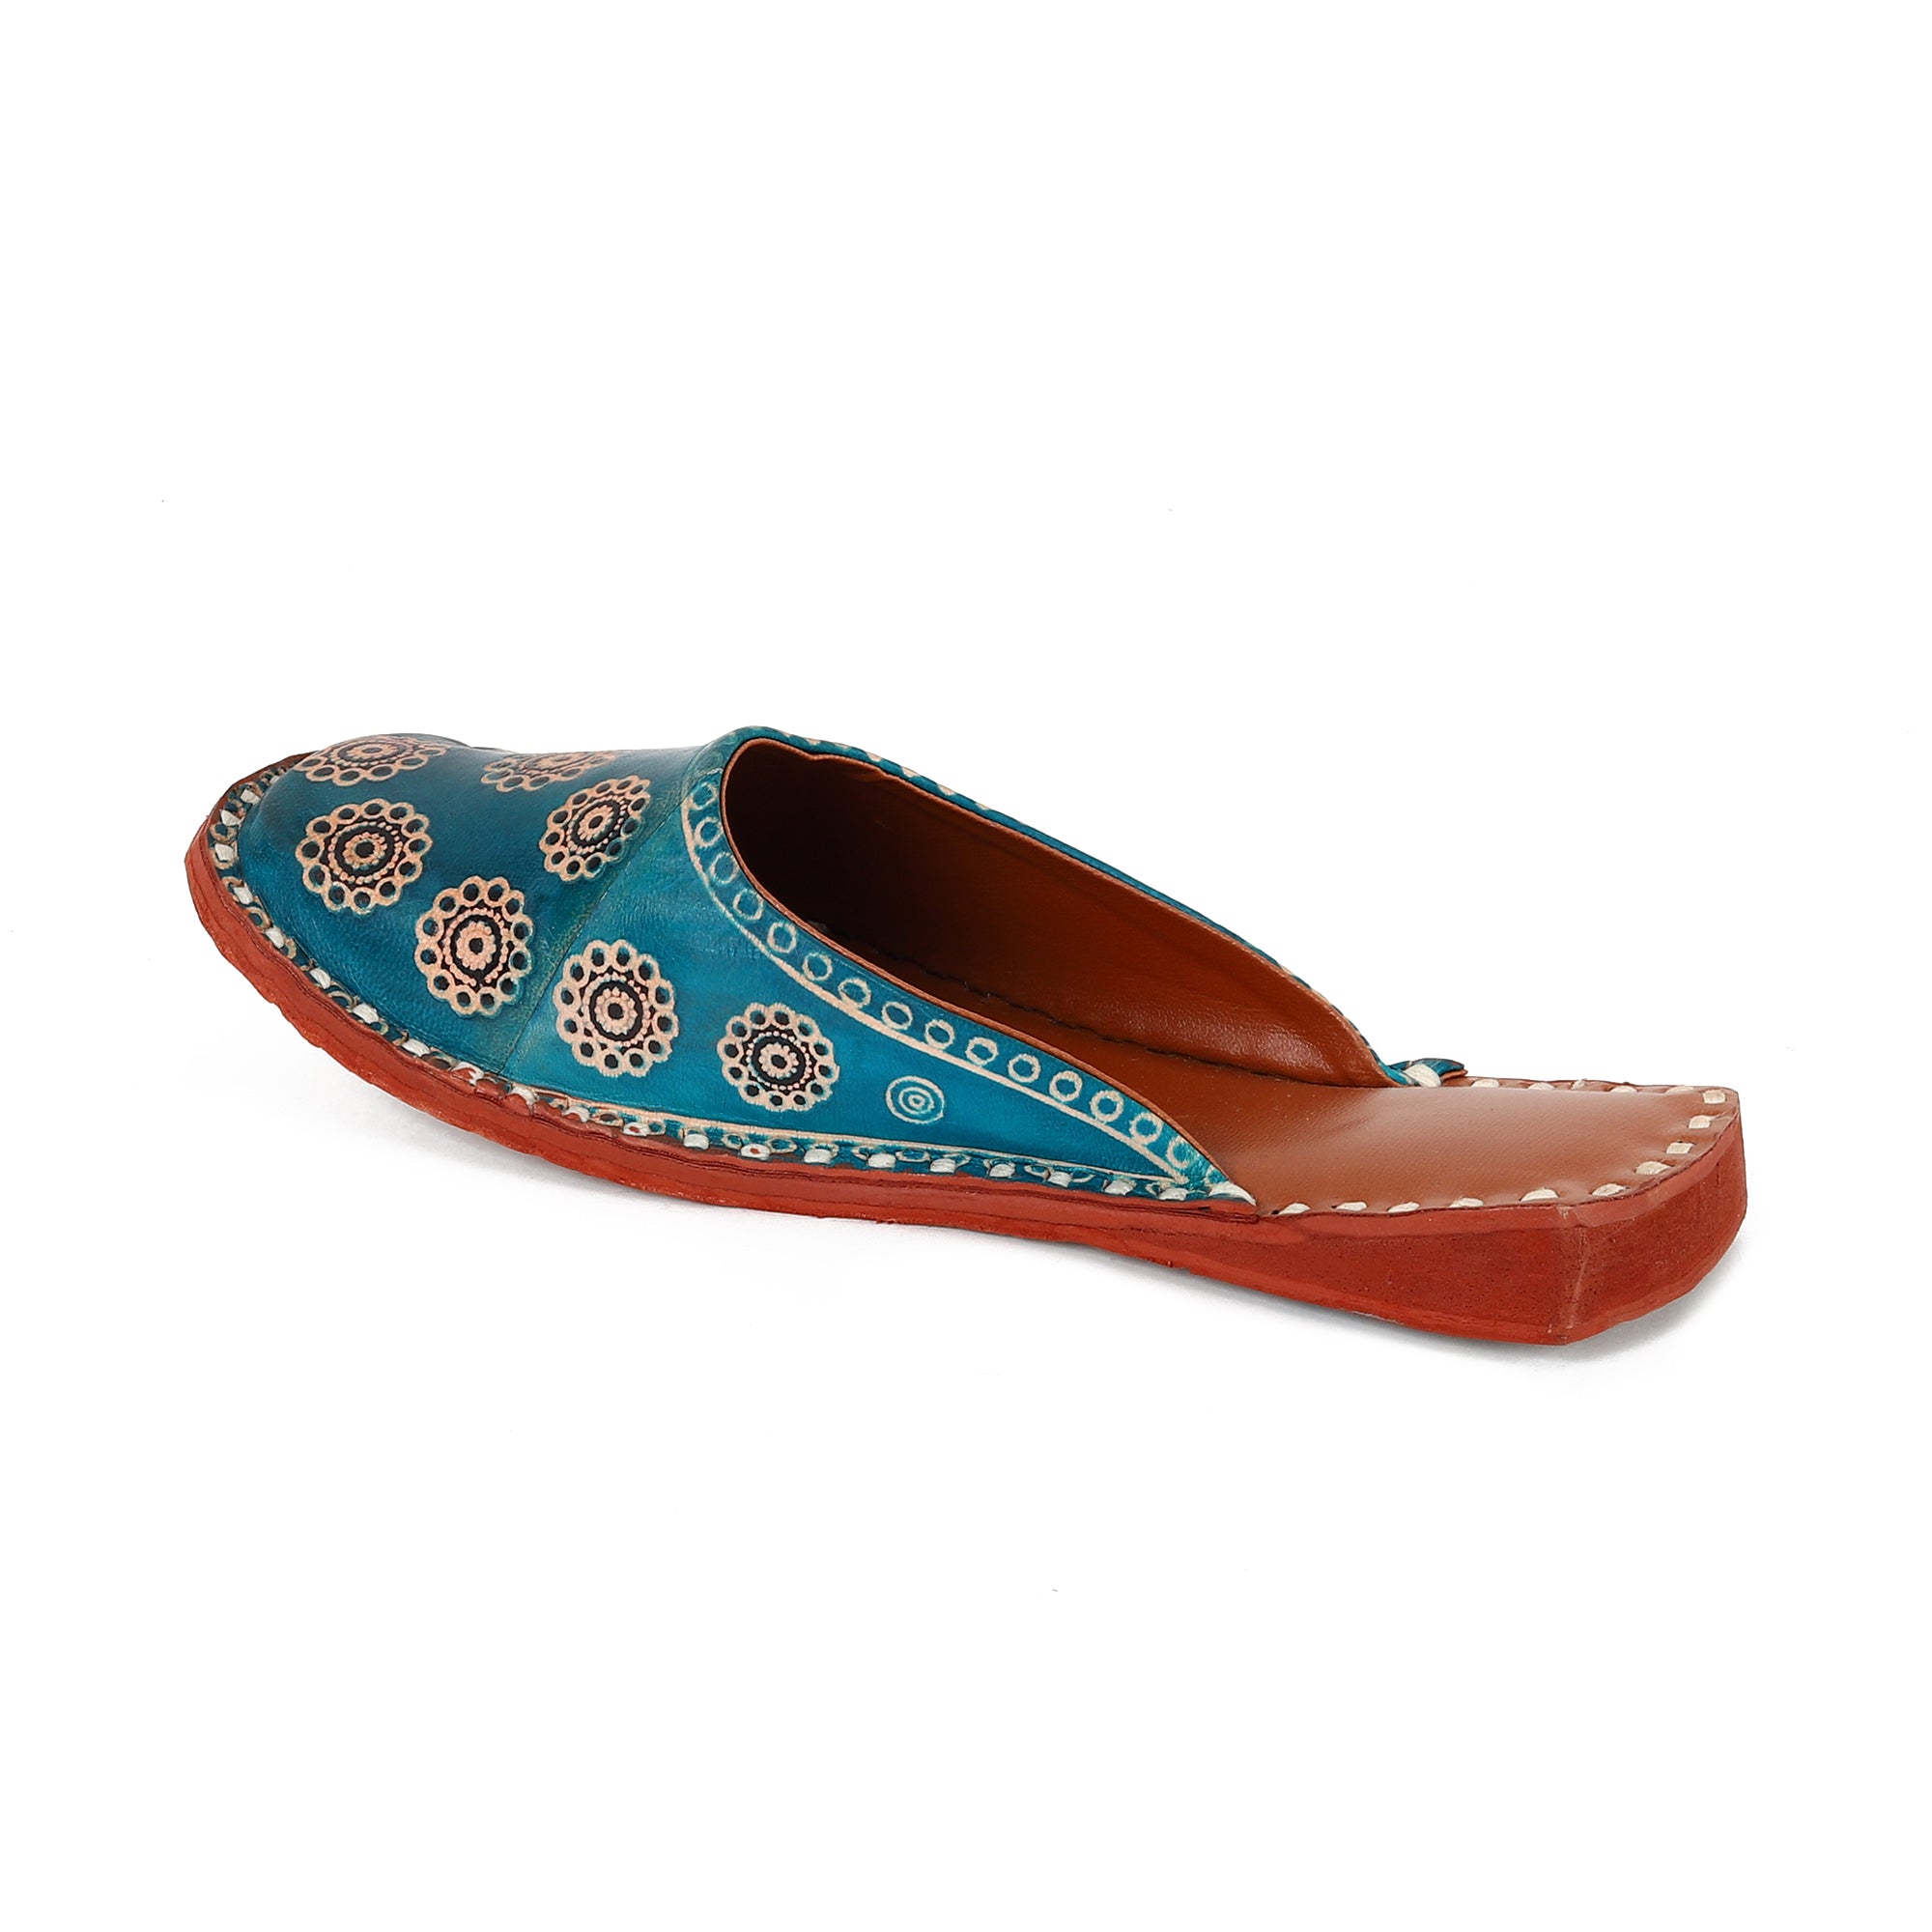 Rajasthani Slippers #1 Photograph by Lisl Dennis - Pixels